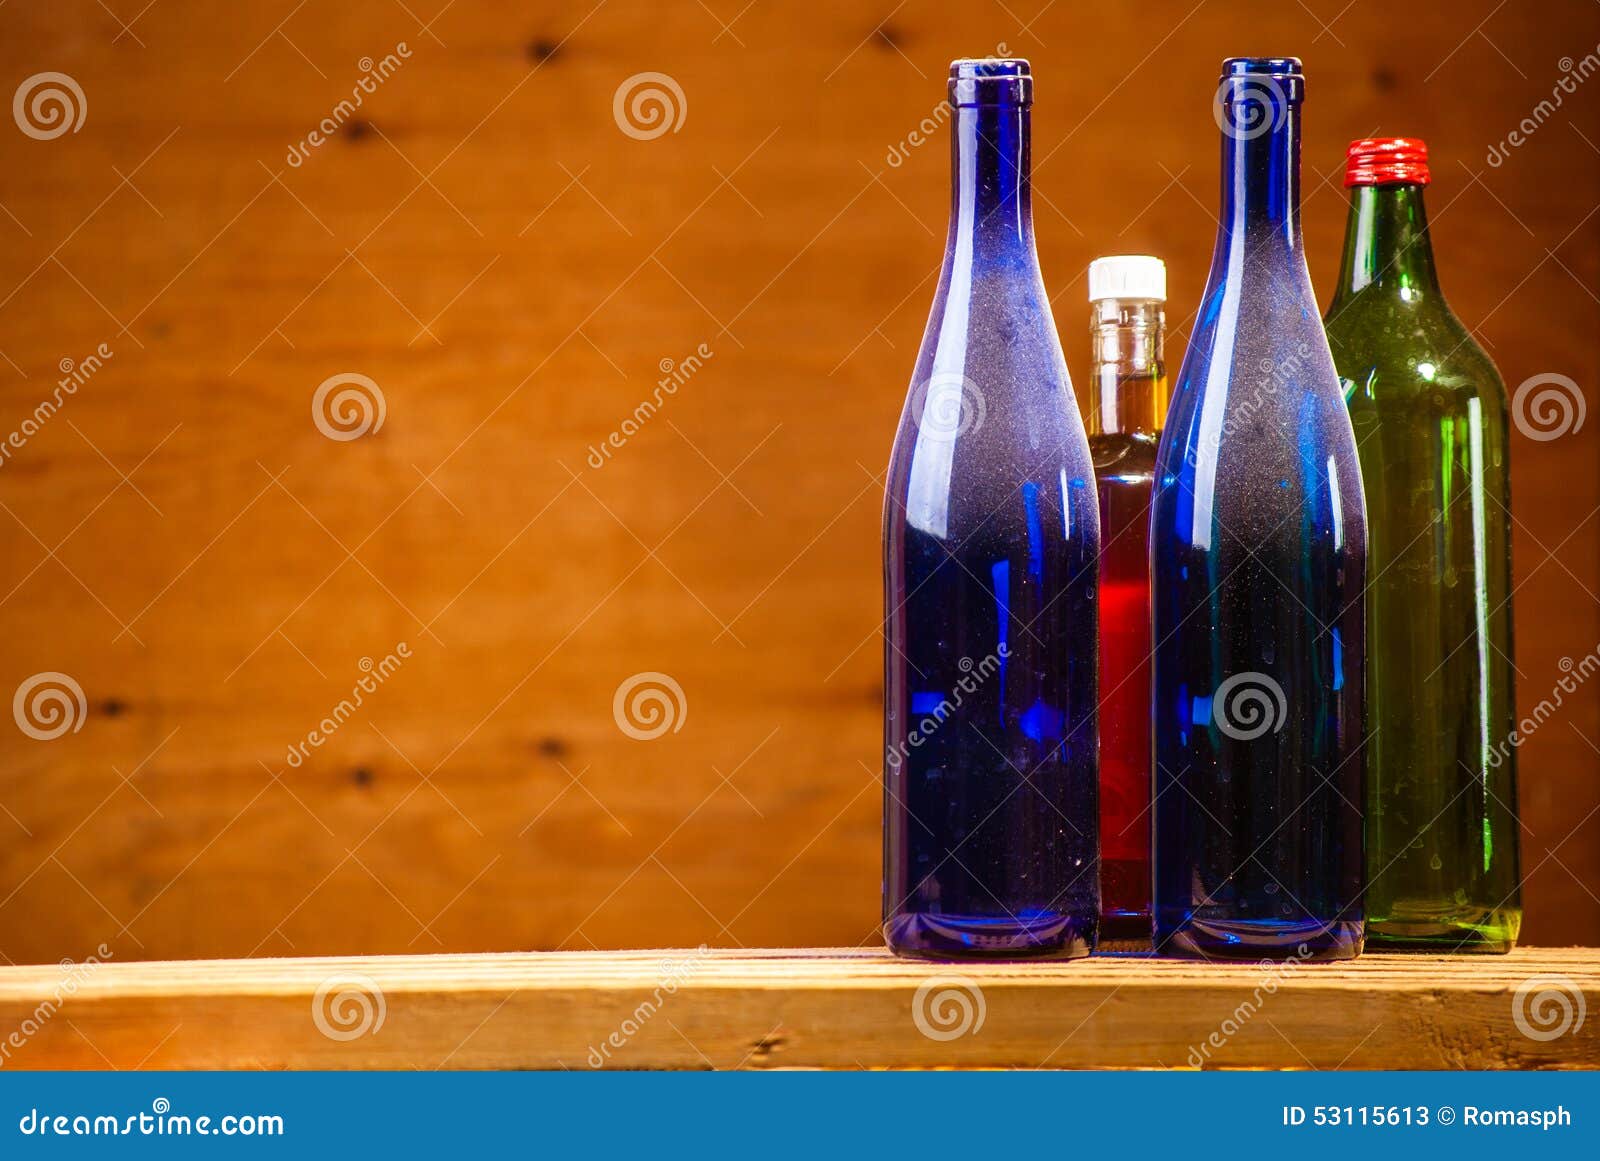 Пустую бутылку на стол не ставят. Звук бутылок. Пустую бутылку на стол фокус. Пустые бутылки стаканы алкоголь. Пустую бутылку на стол ребром фокус.